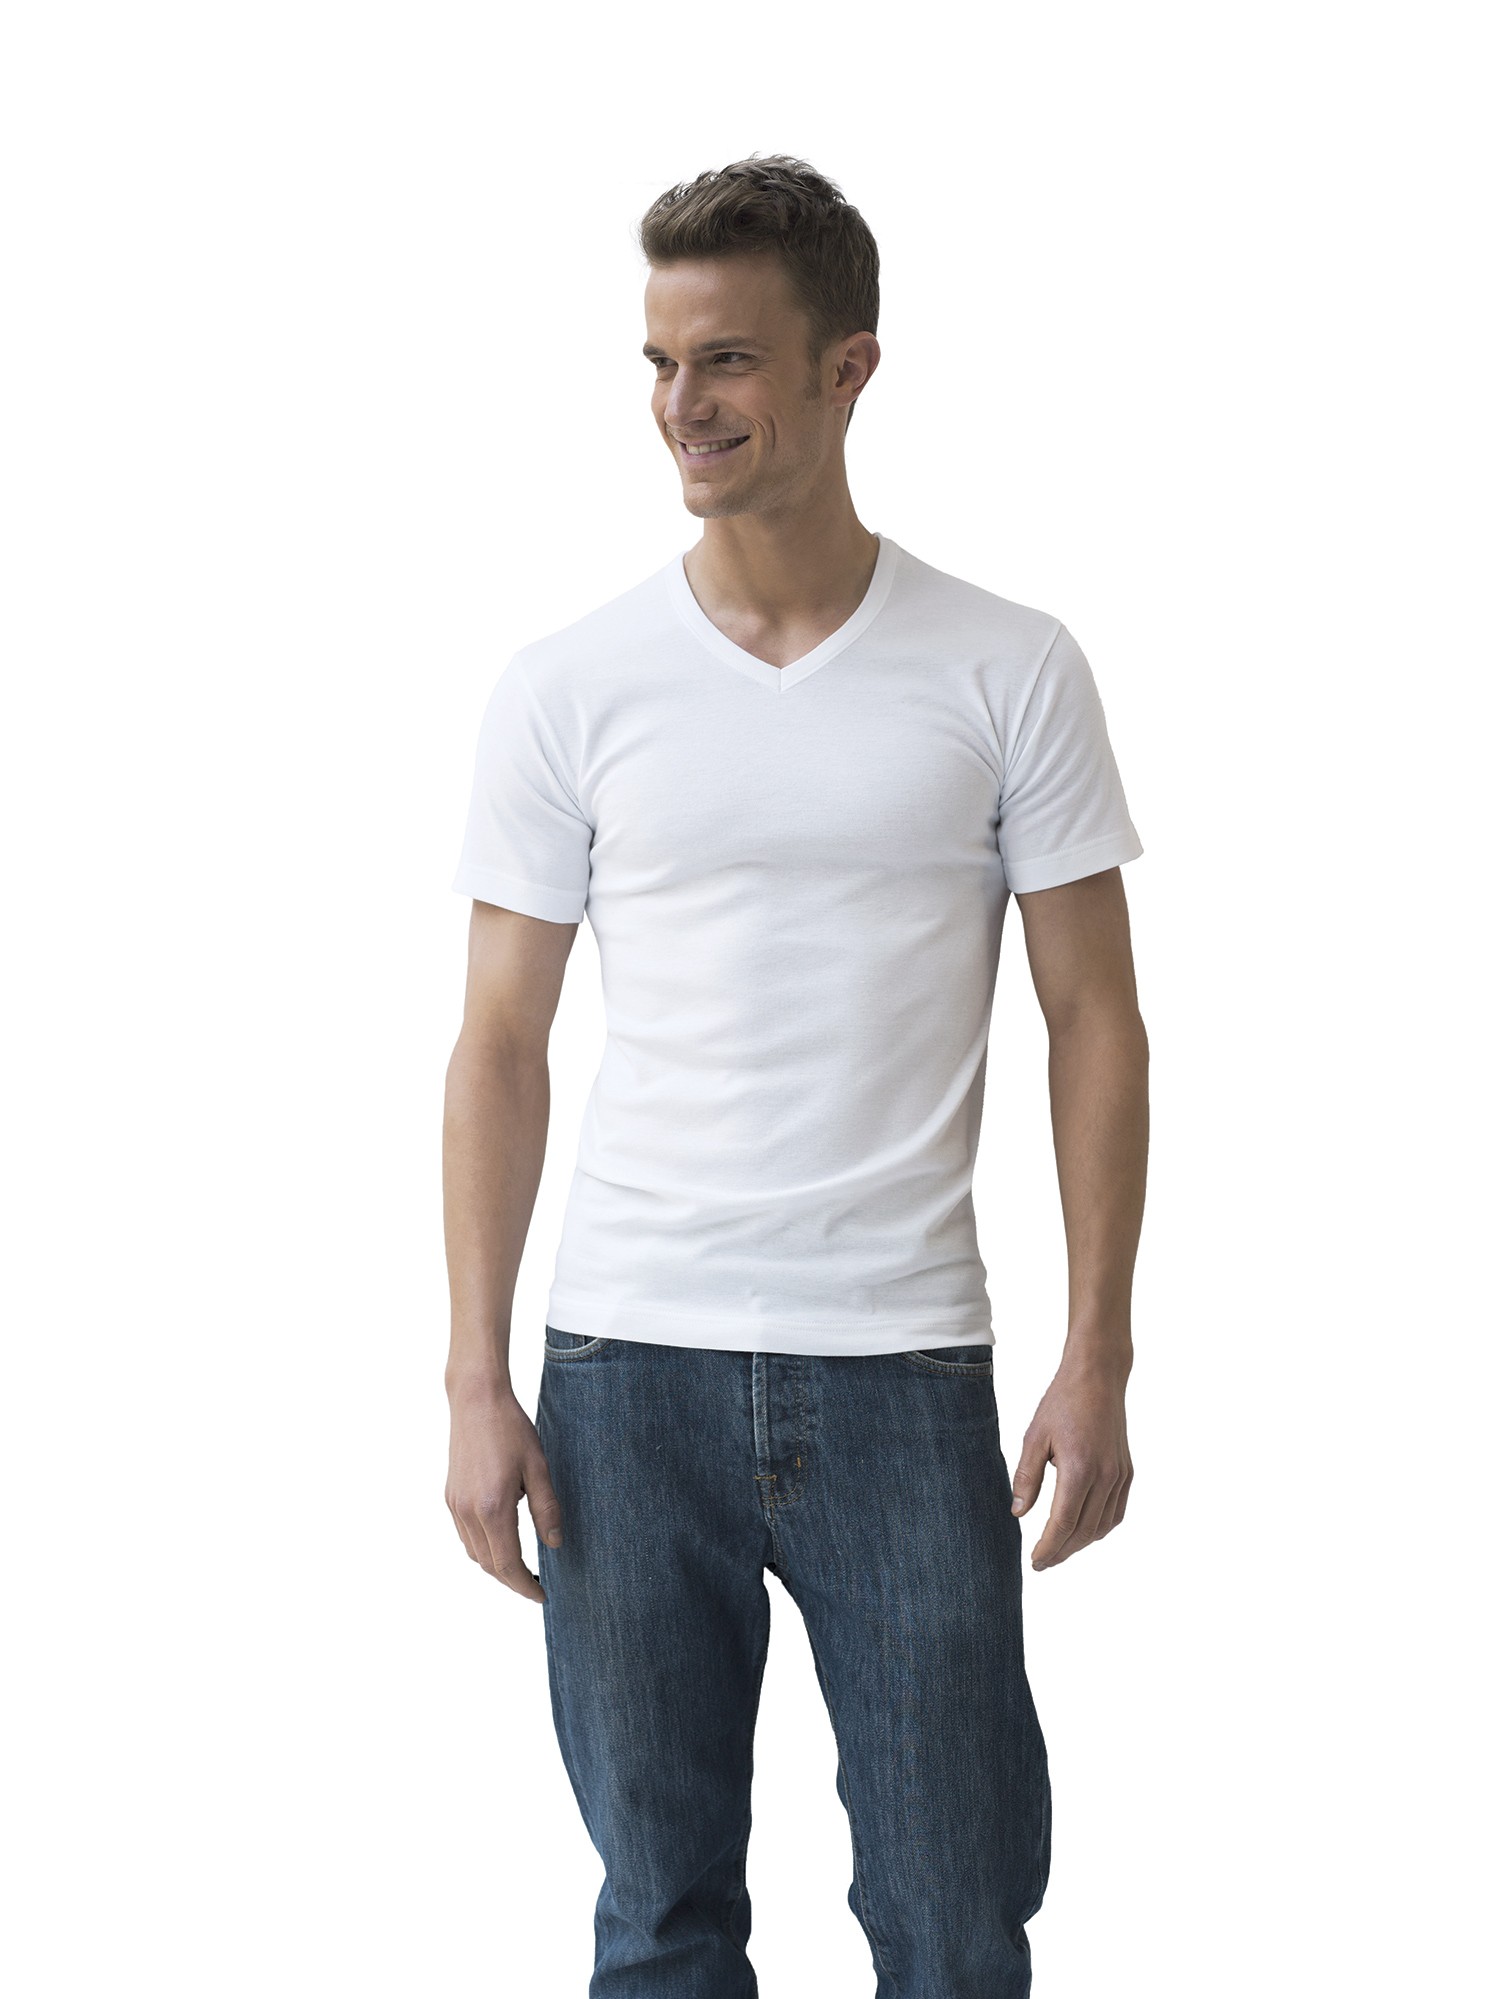 ATHENA Homme L220 T shirt, Blanc, S EU : : Mode